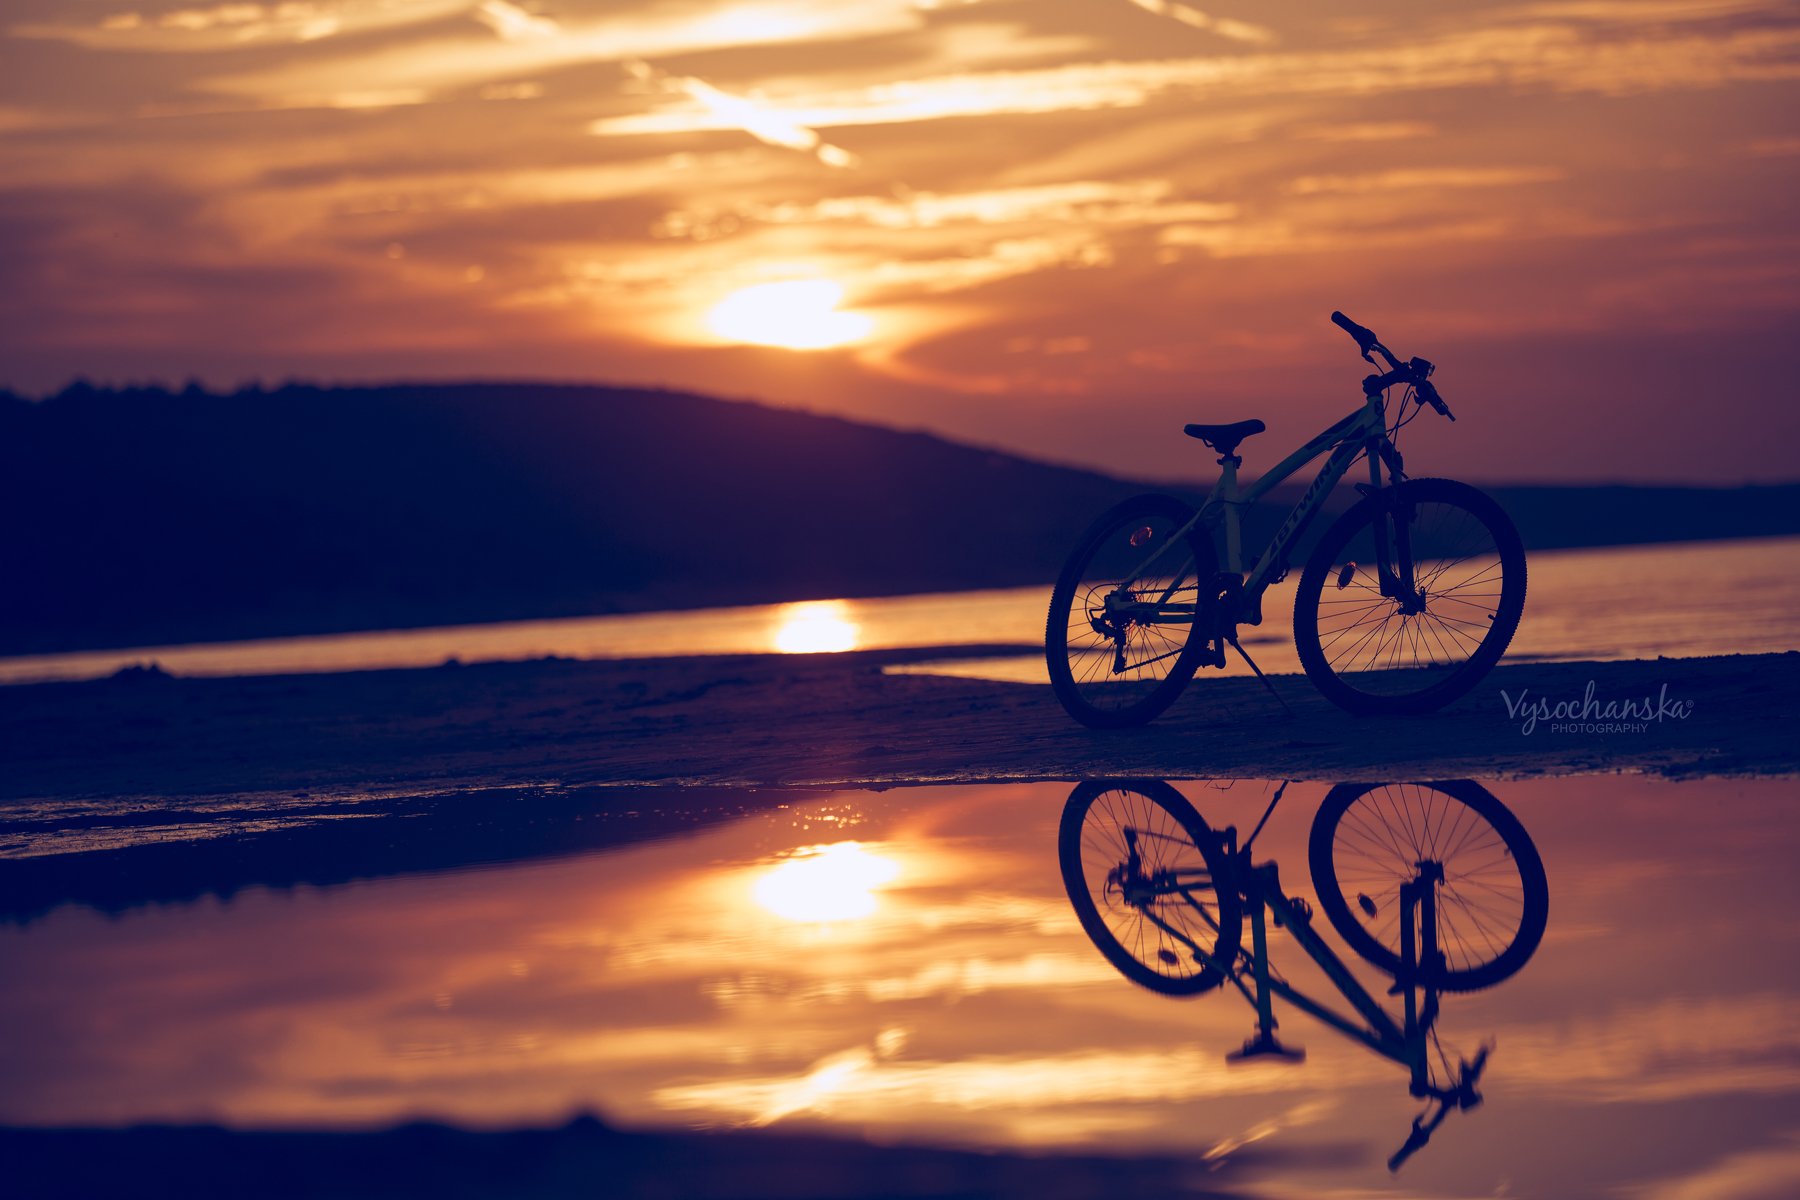 sunset, bicycle, sea, sand, evening, steel life, Vysochanska Photography